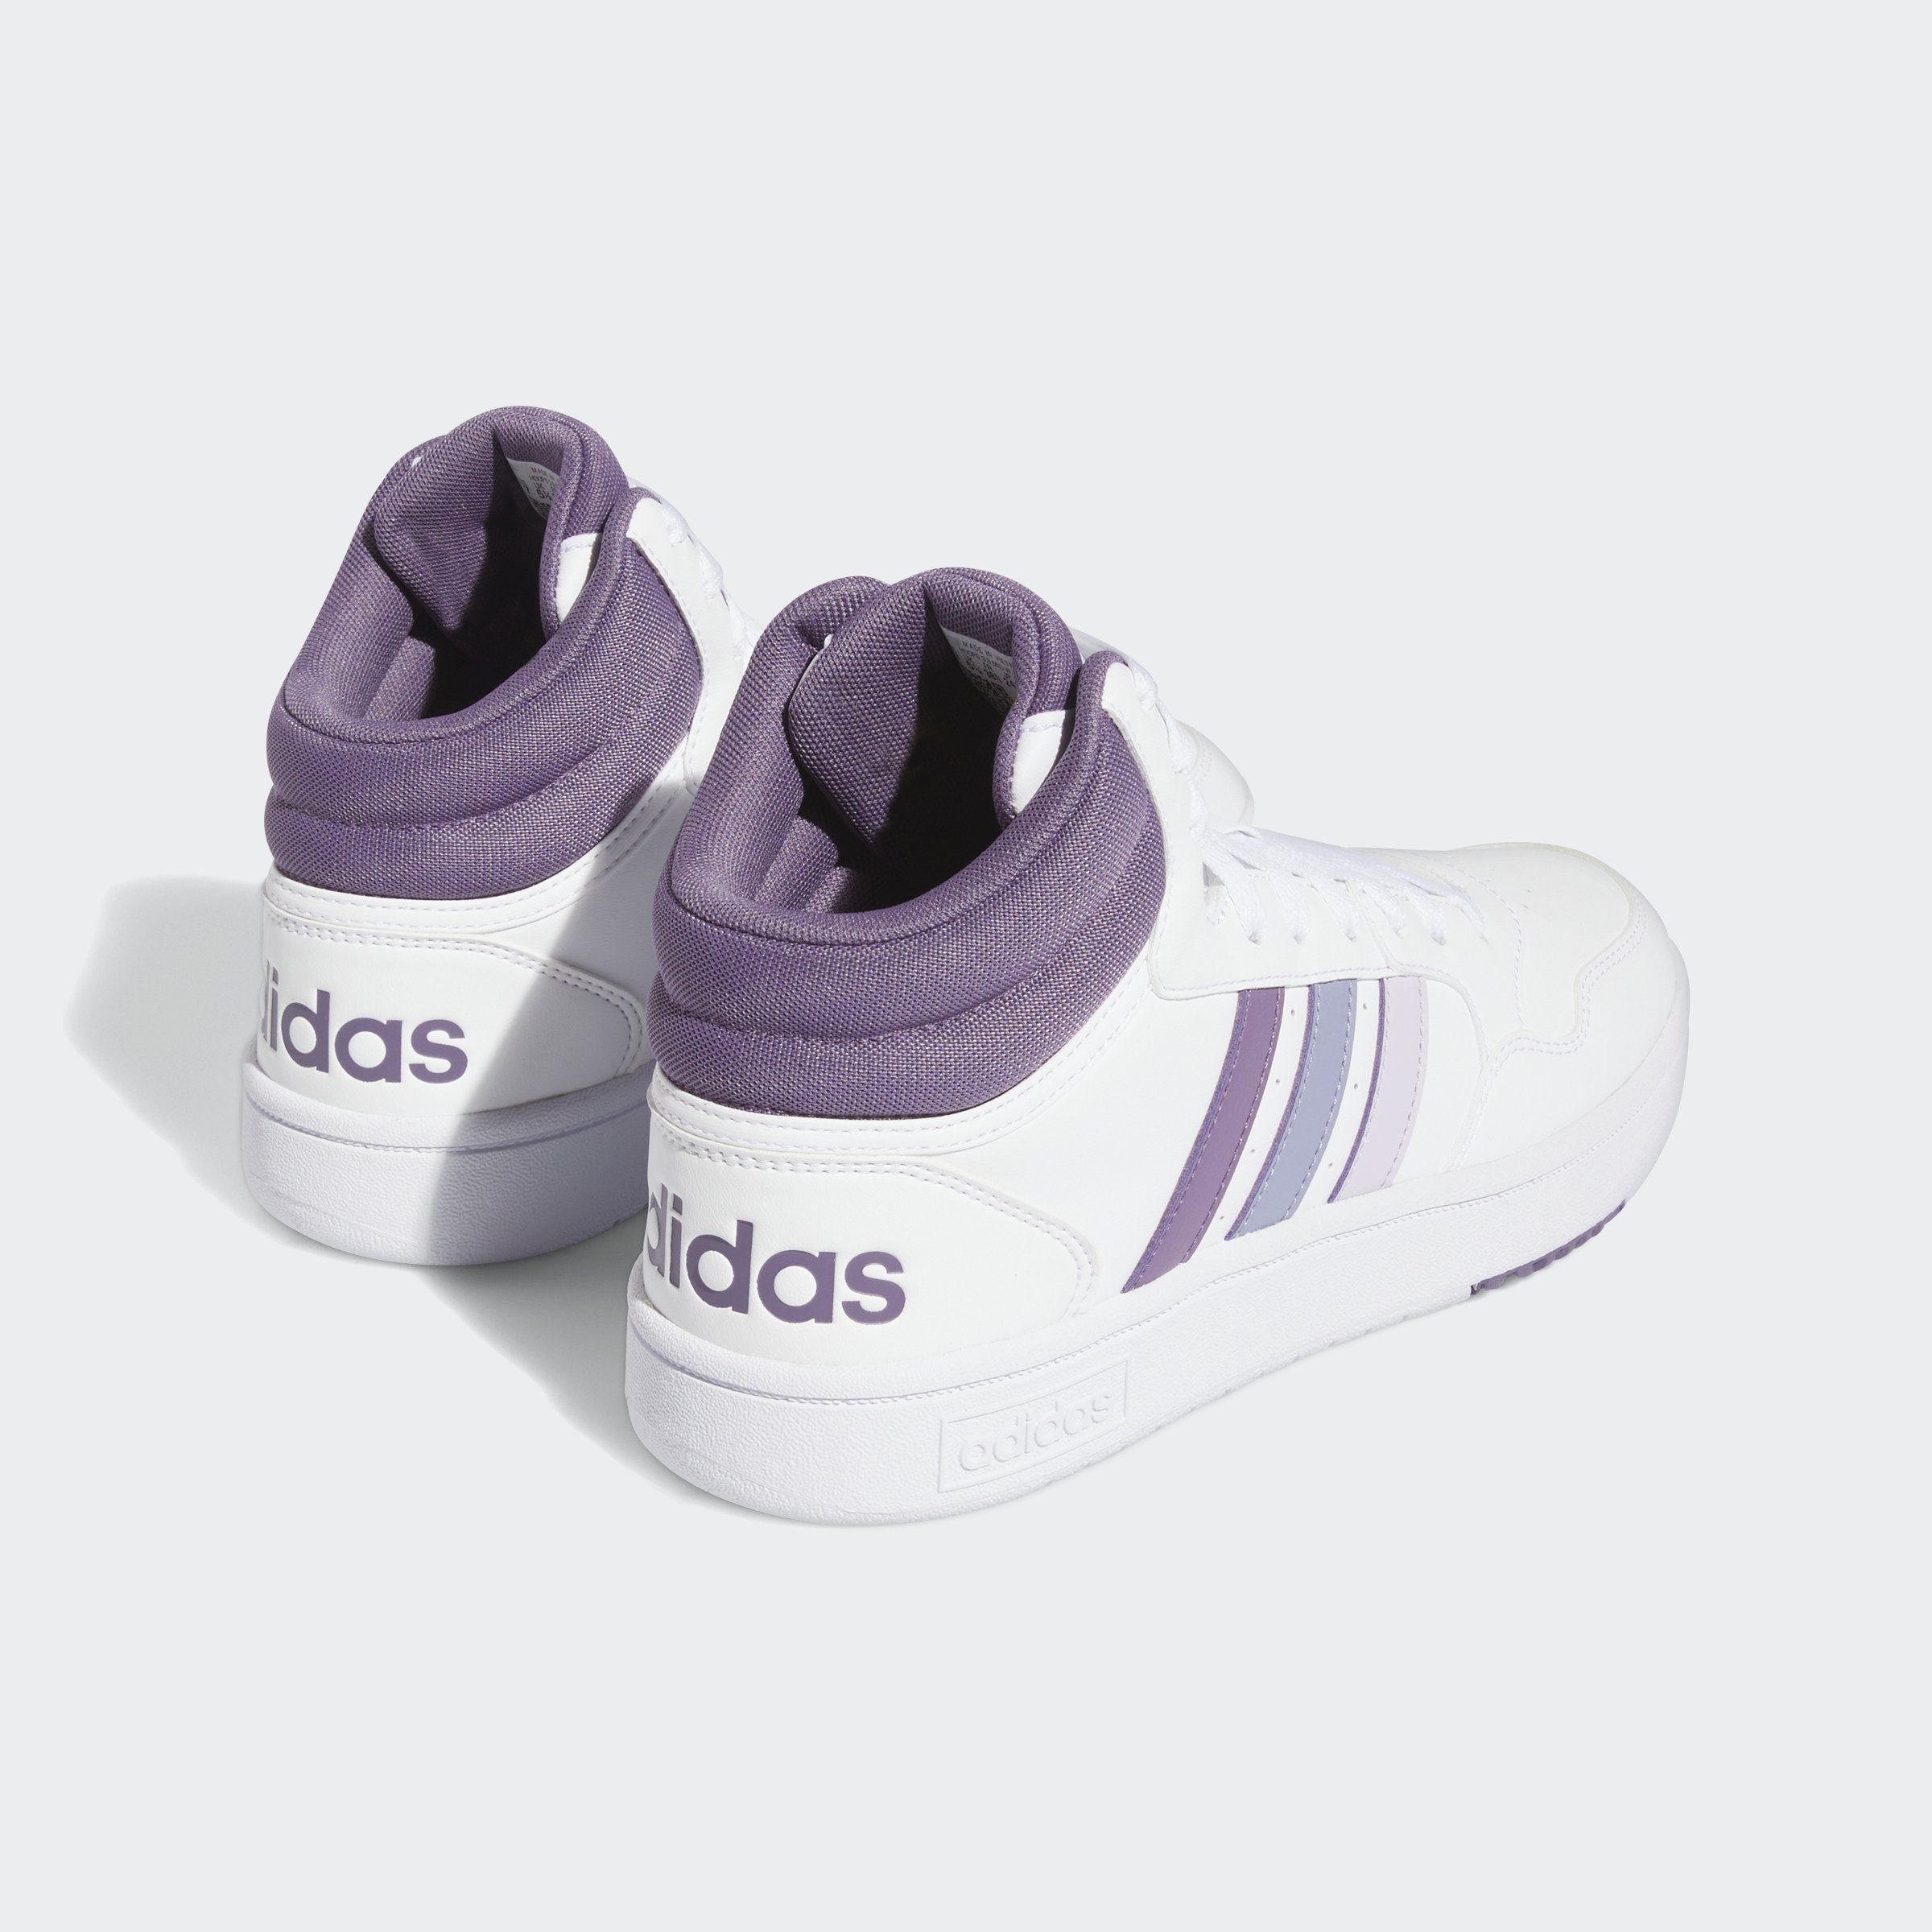 Sportswear / Violet Cloud 3.0 Silver adidas MID HOOPS / White Silver Dawn Sneaker